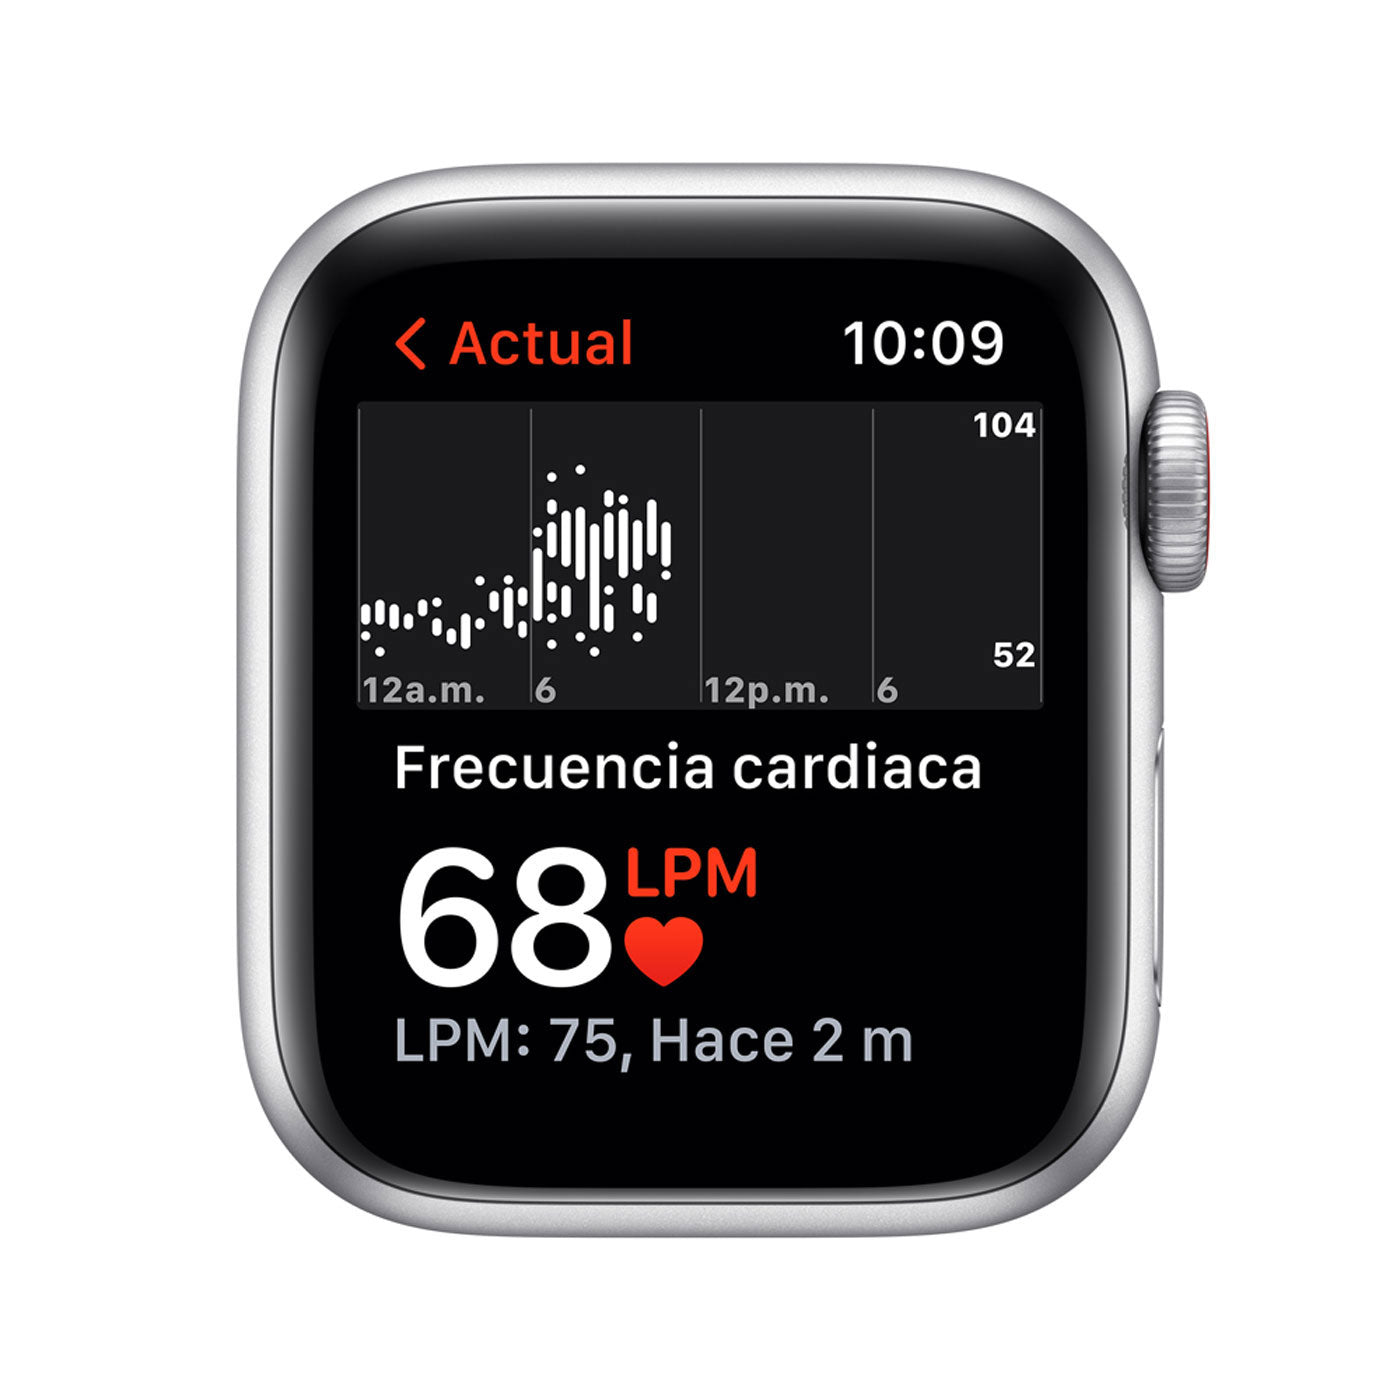 Apple Watch SE Nike (GPS) de 40 mm - Talla única - Caja de aluminio en plata - Correa deportiva en color Platino Negra